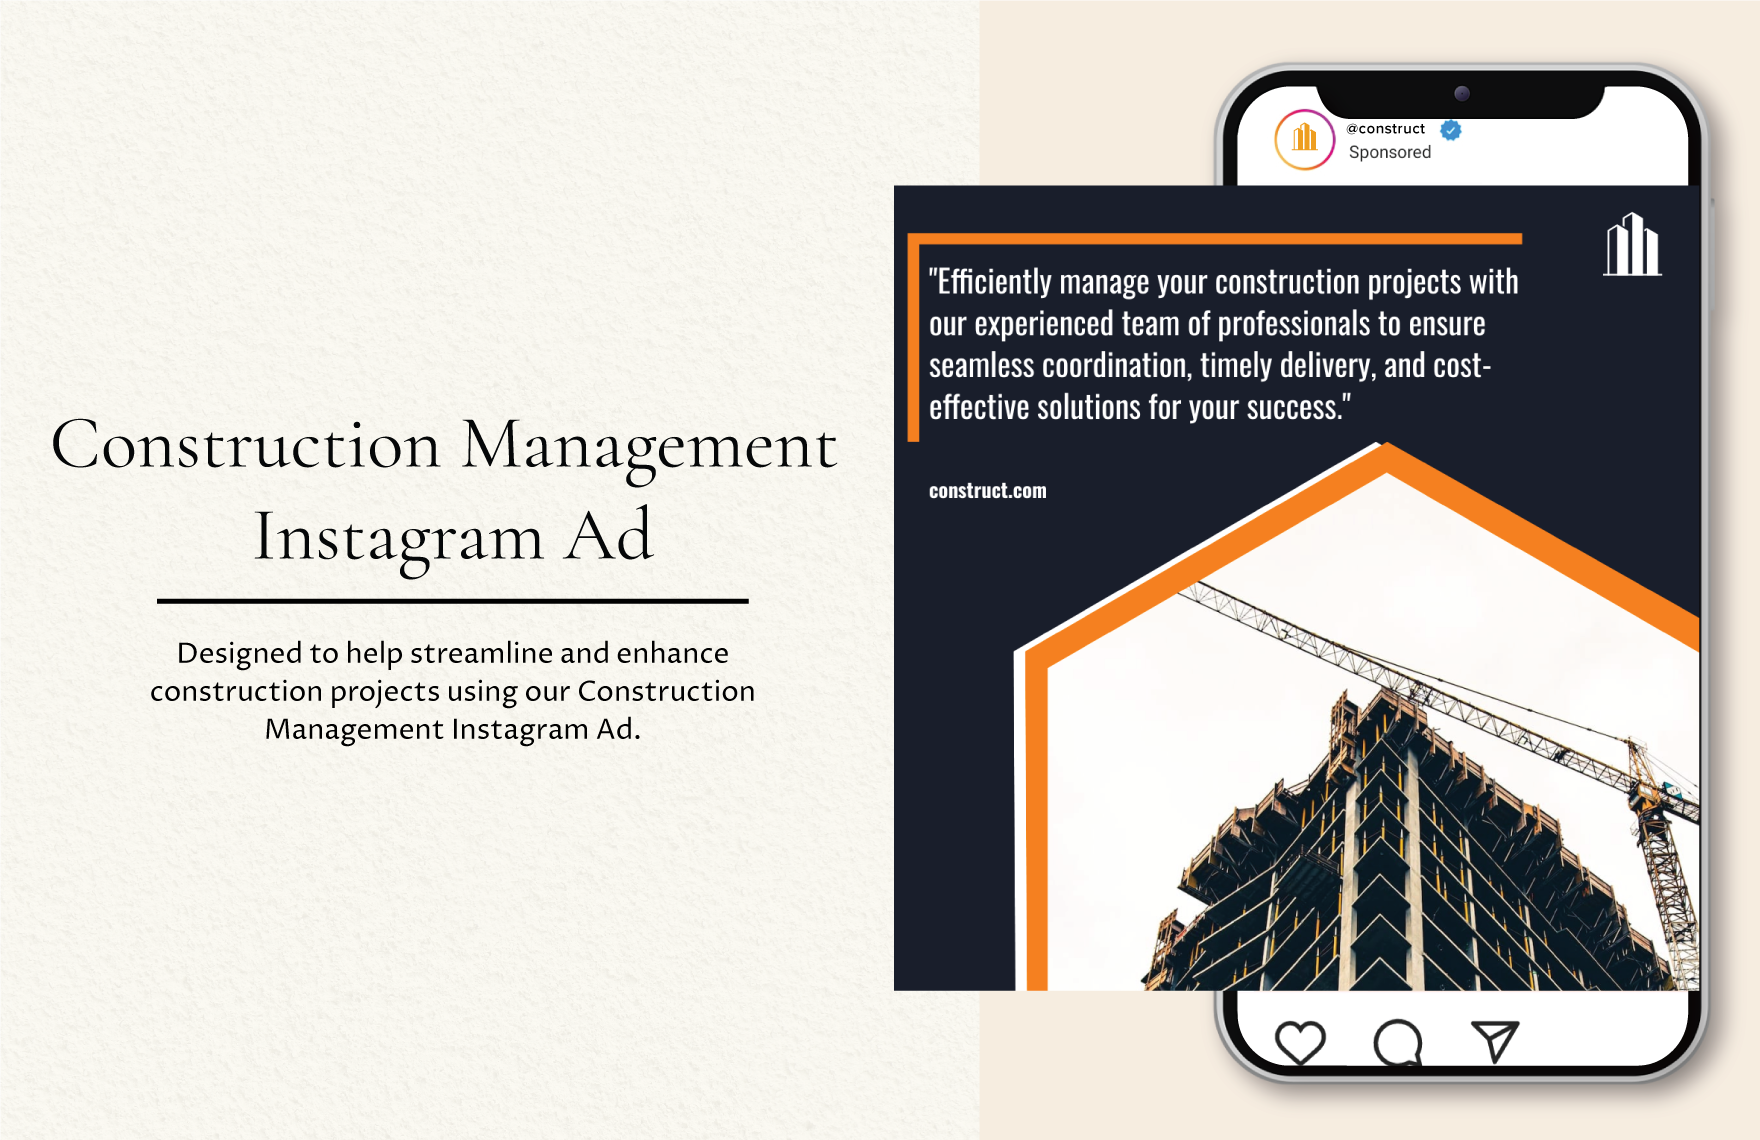 Construction Management Instagram Ad